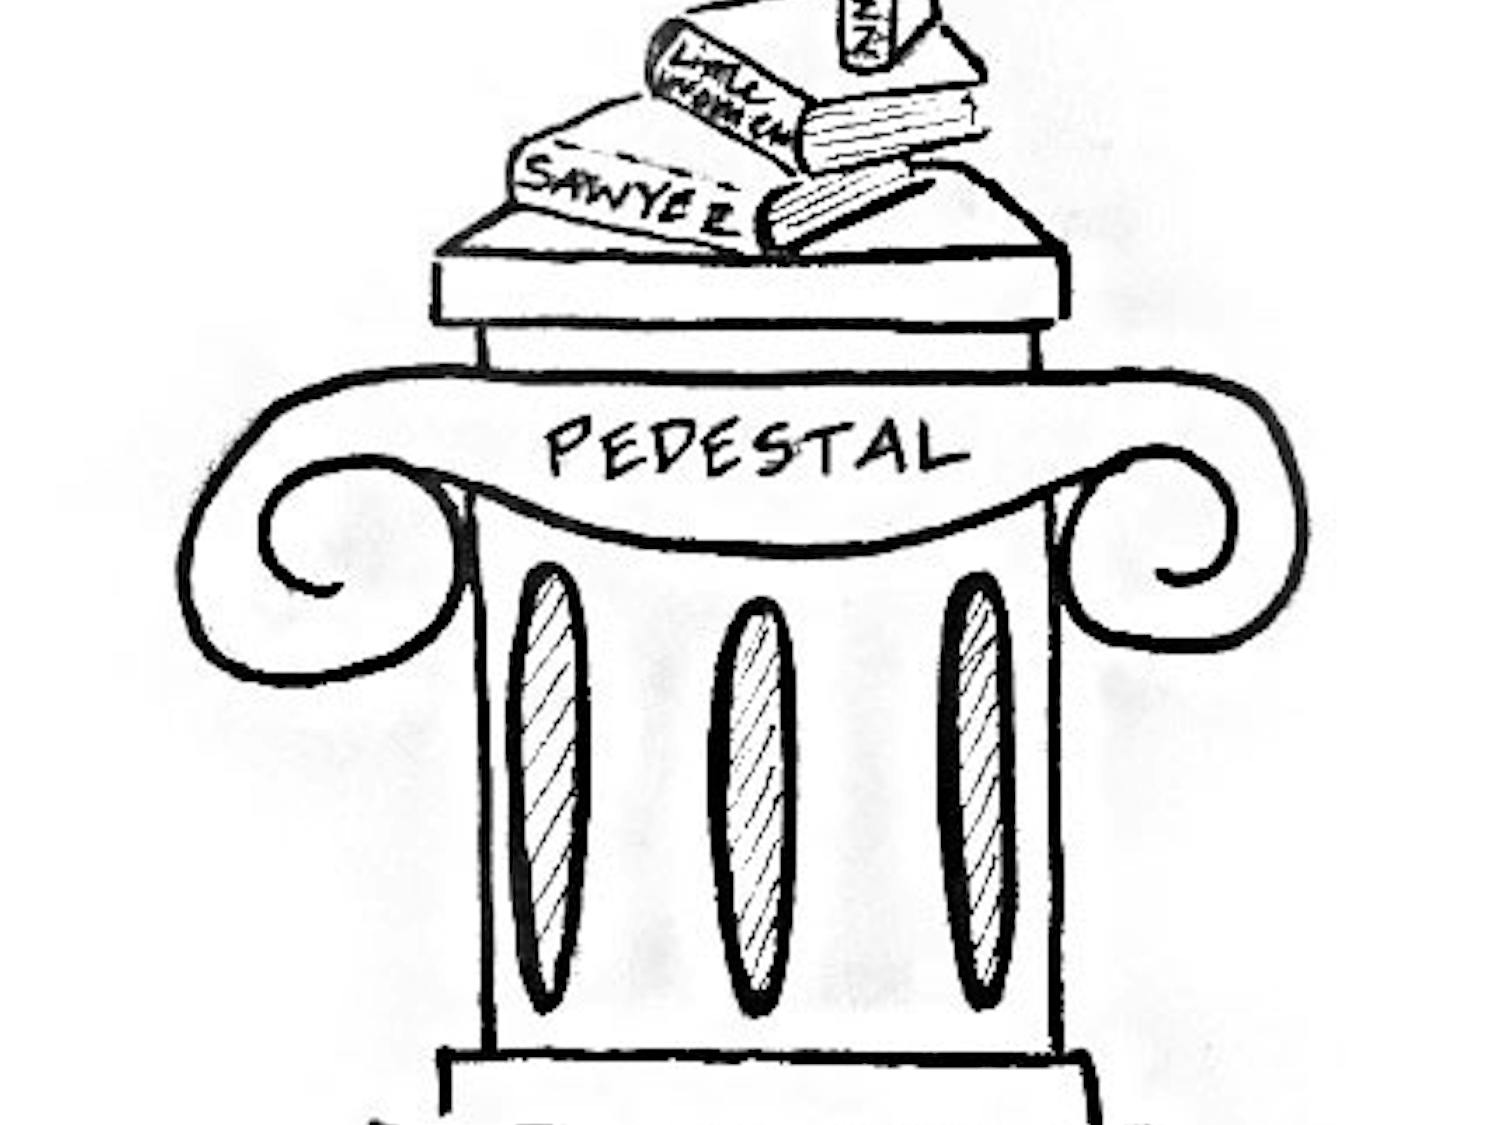 pedestal